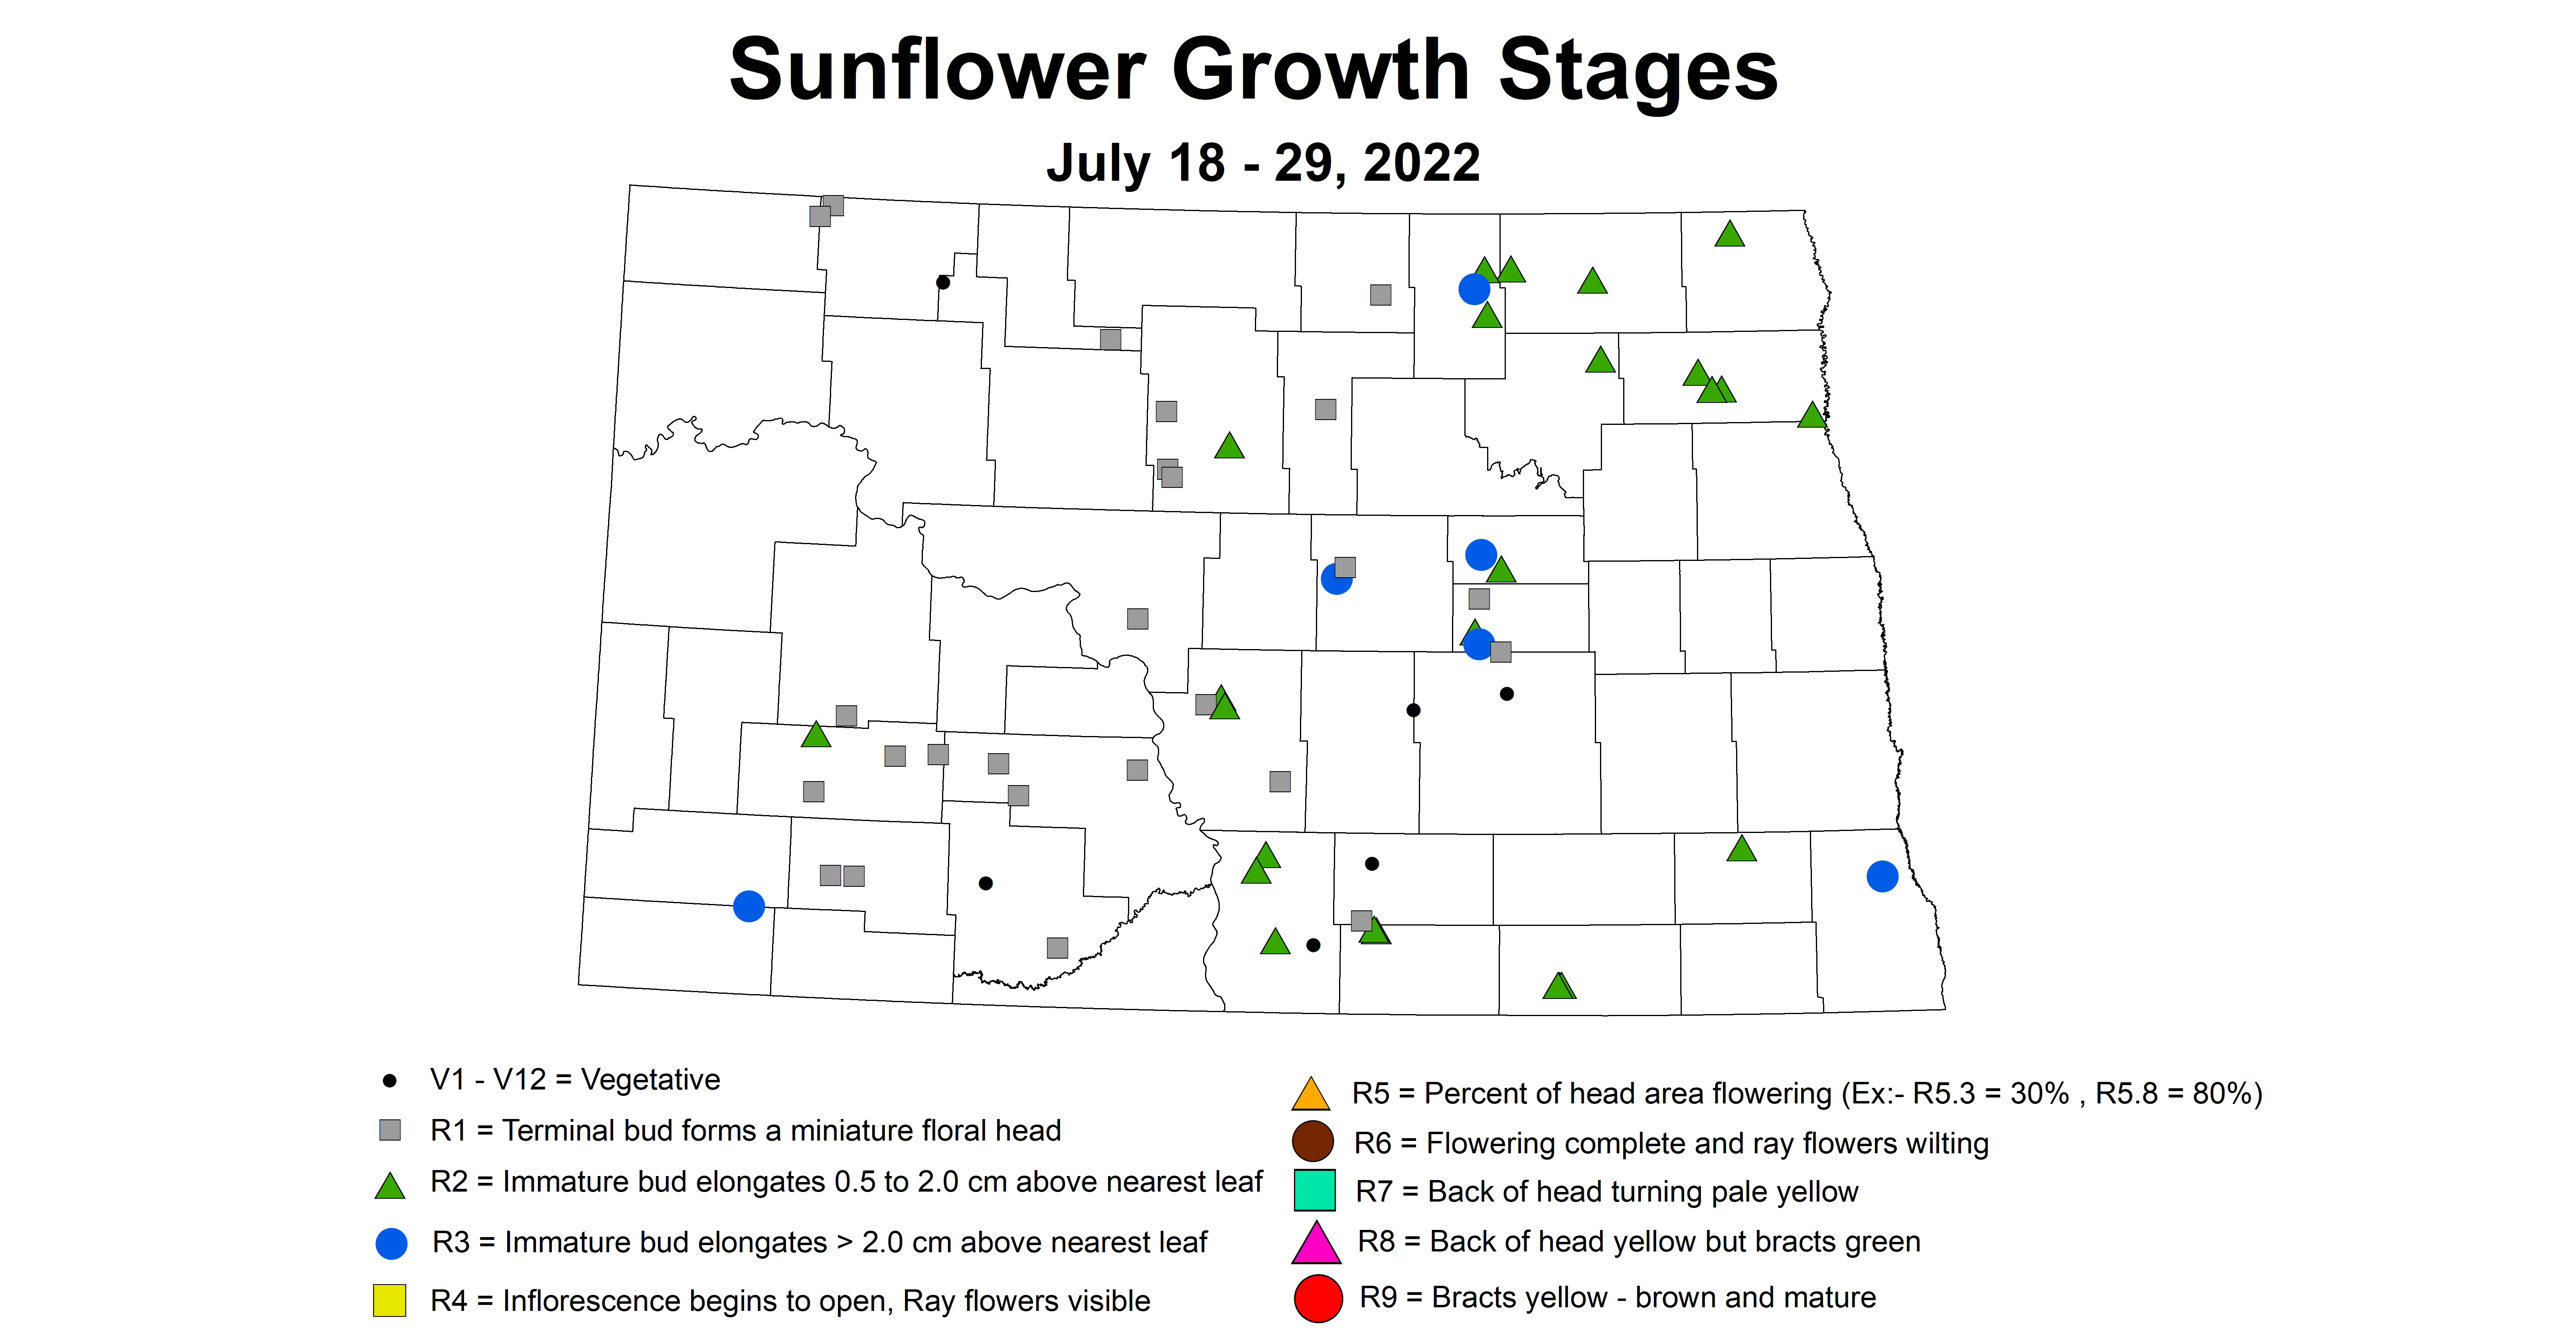 sunflower growth stages 2022 7.18-7.29.jpg